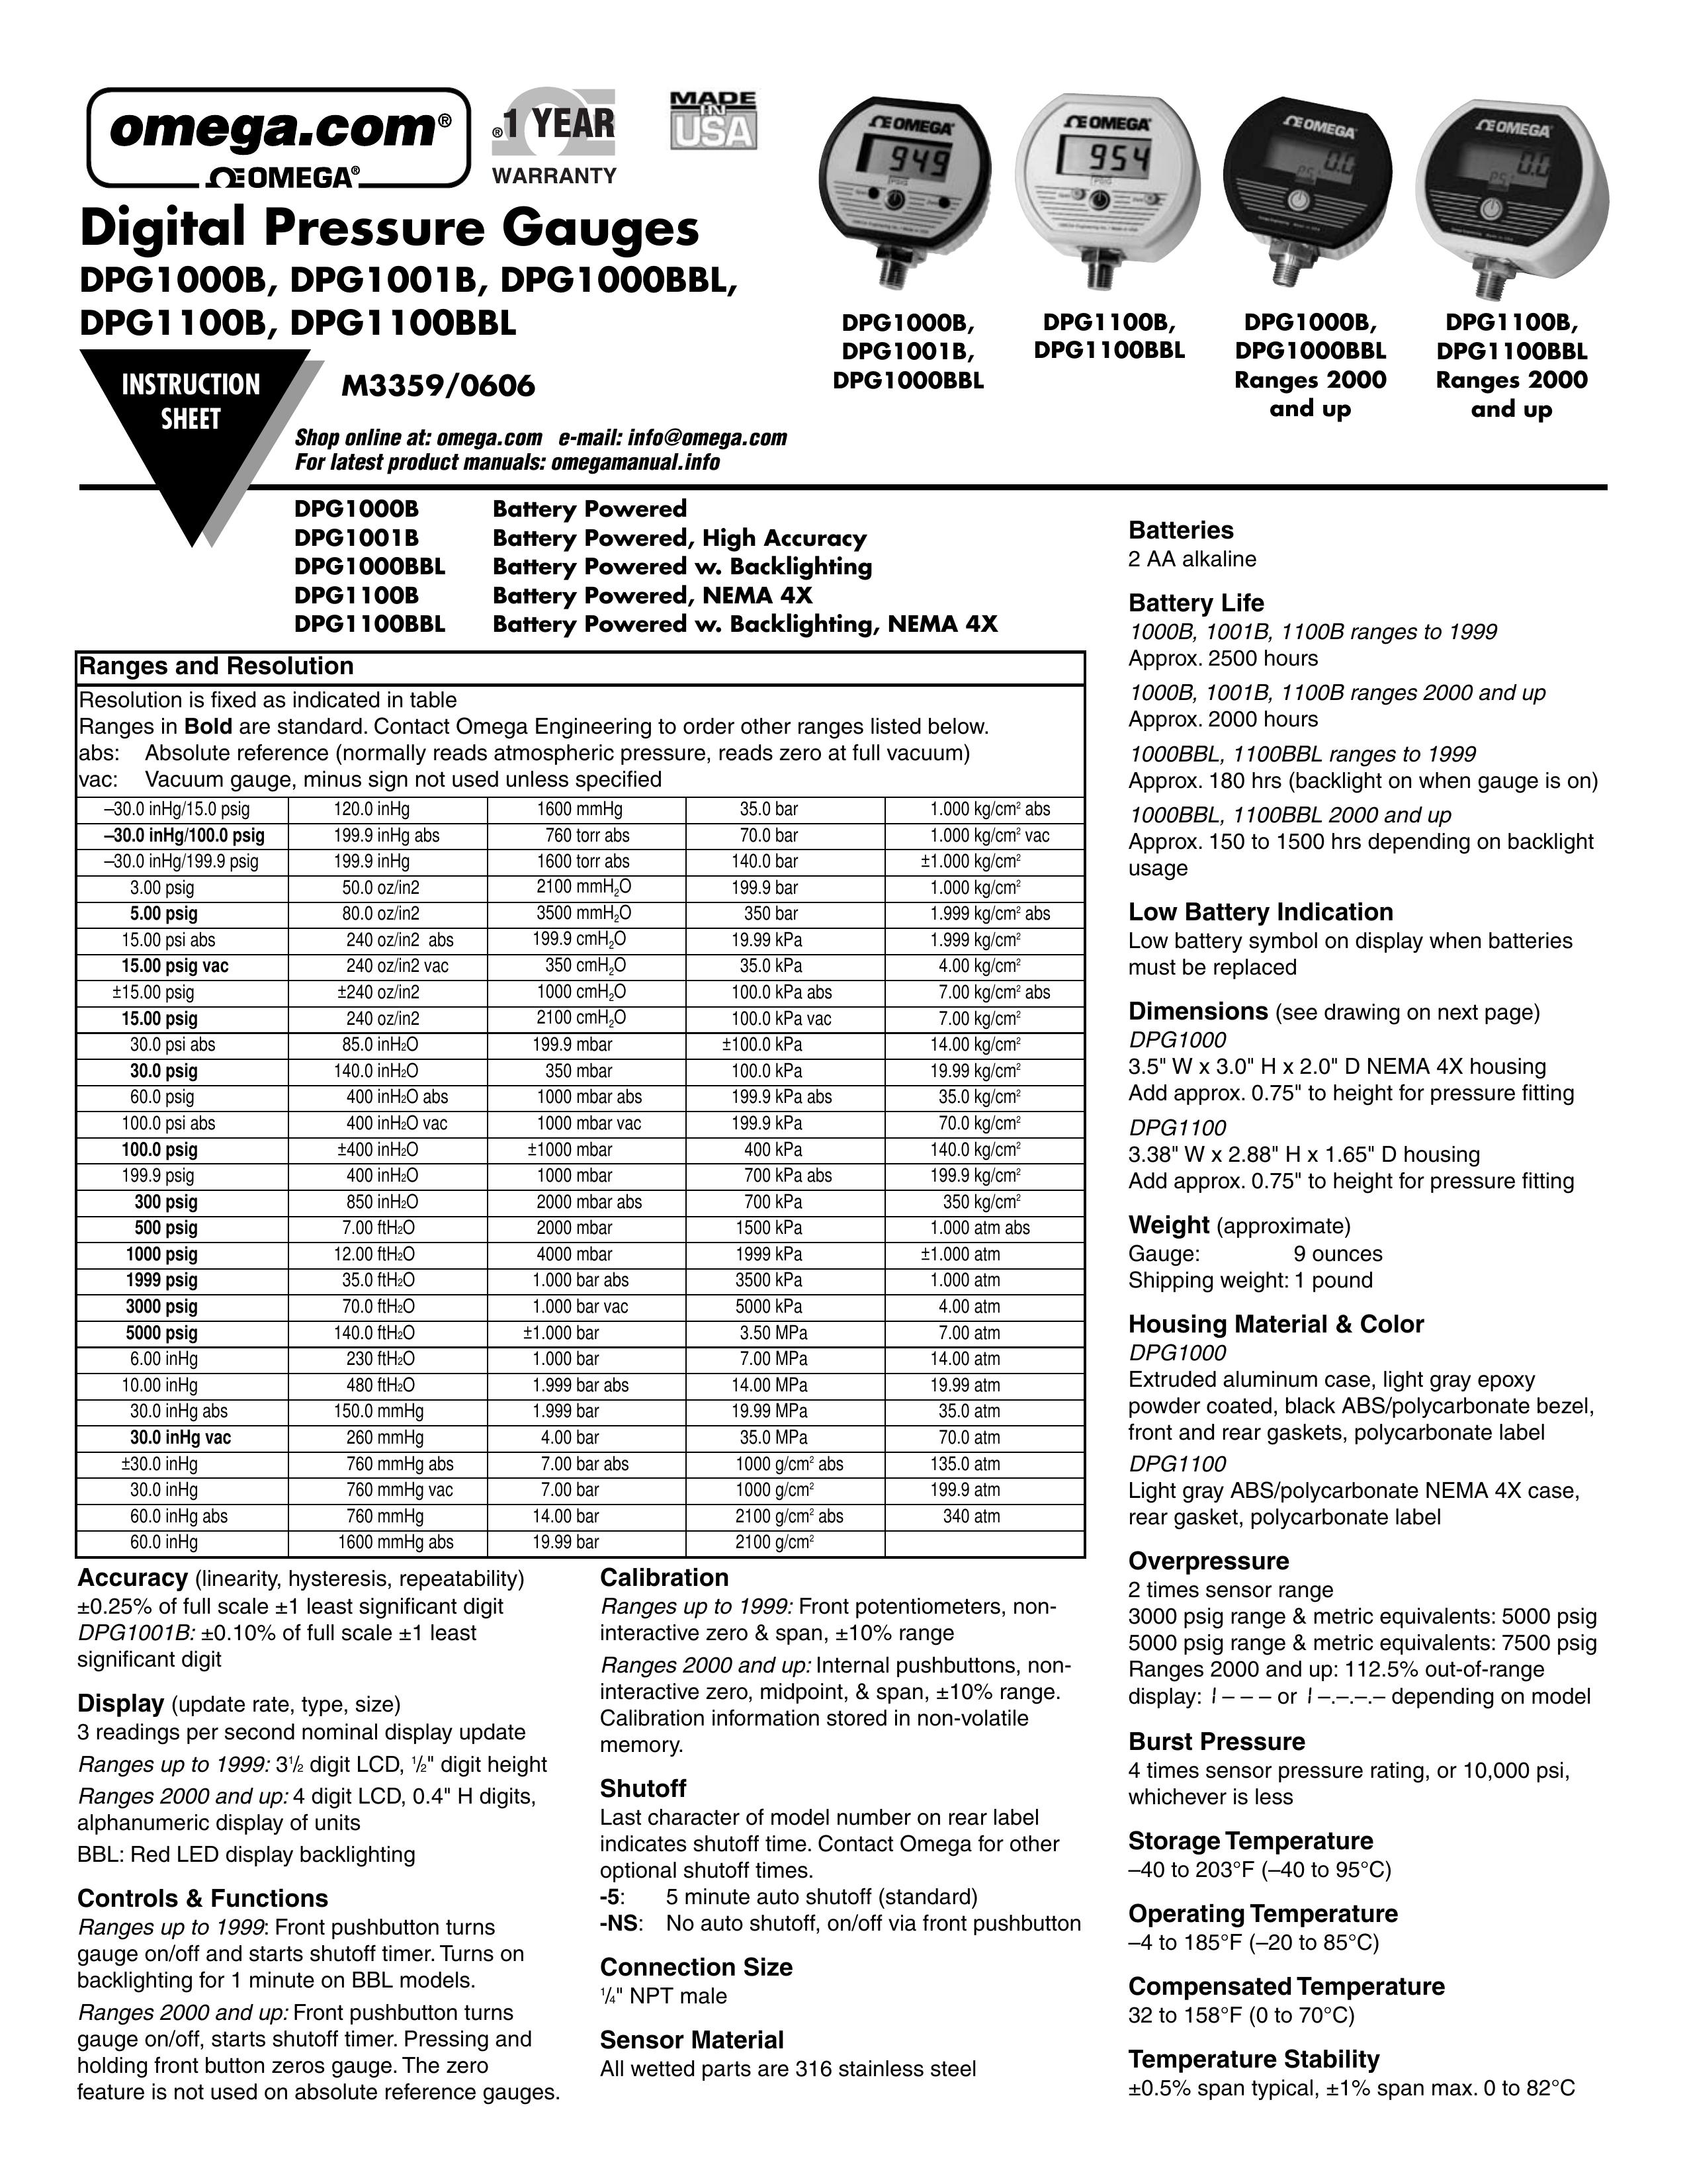 Omega Engineering DPG1100B Blood Pressure Monitor User Manual